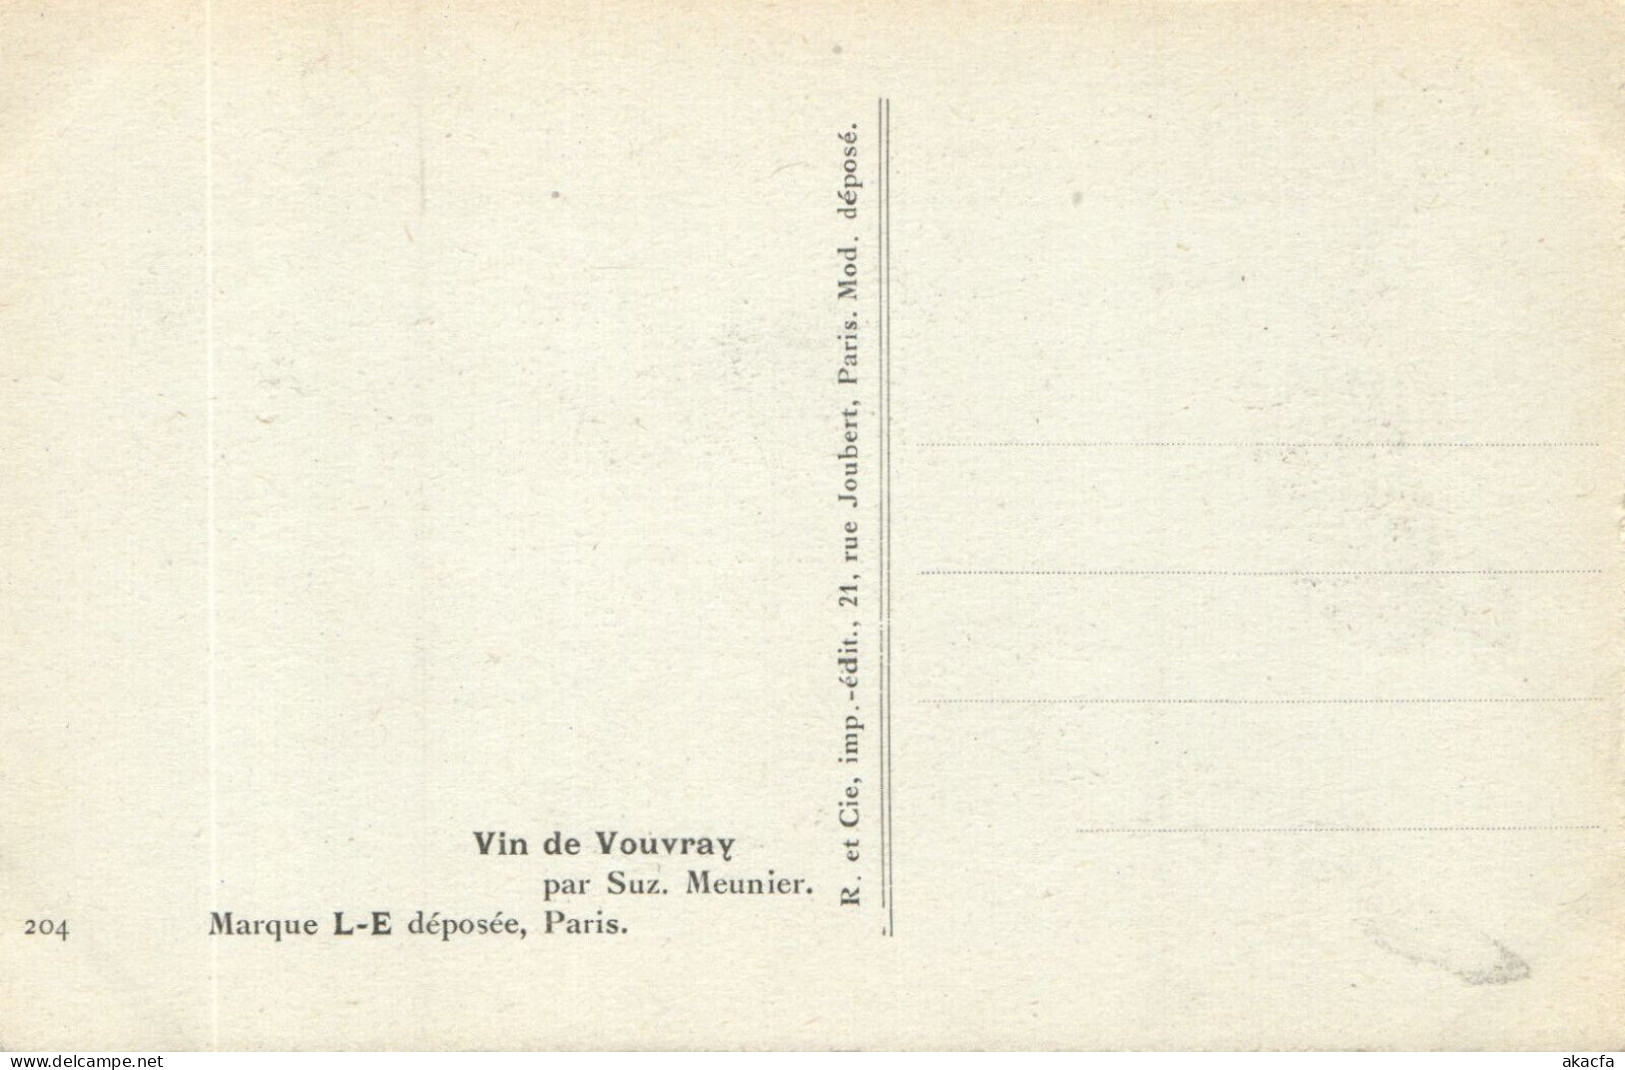 PC ARTIST SIGNED, MEUNIER, RISQUE, VIN DE VOUVRAY, Vintage Postcard (b50637) - Meunier, S.